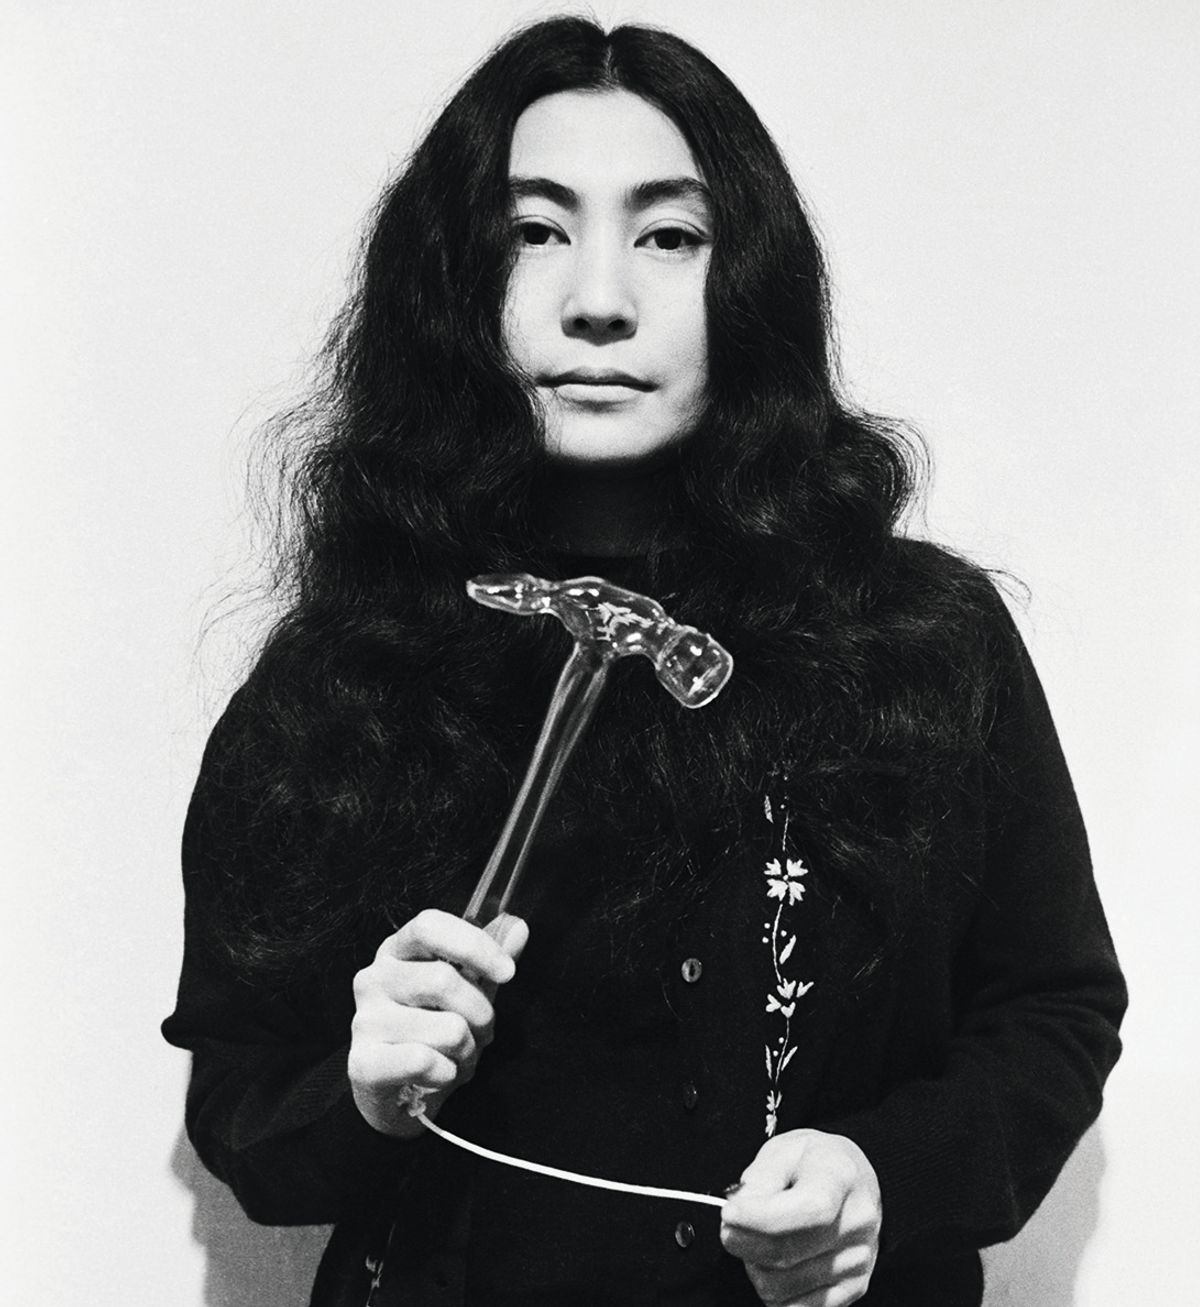 1967’de Londra Lisson Gallery’deki Half-a-Wind (Rüzgârın Yarısı) sergisi sırasında fotoğraflanan Yoko Ono.

HALF-A-WIND: © CLAY PERRY